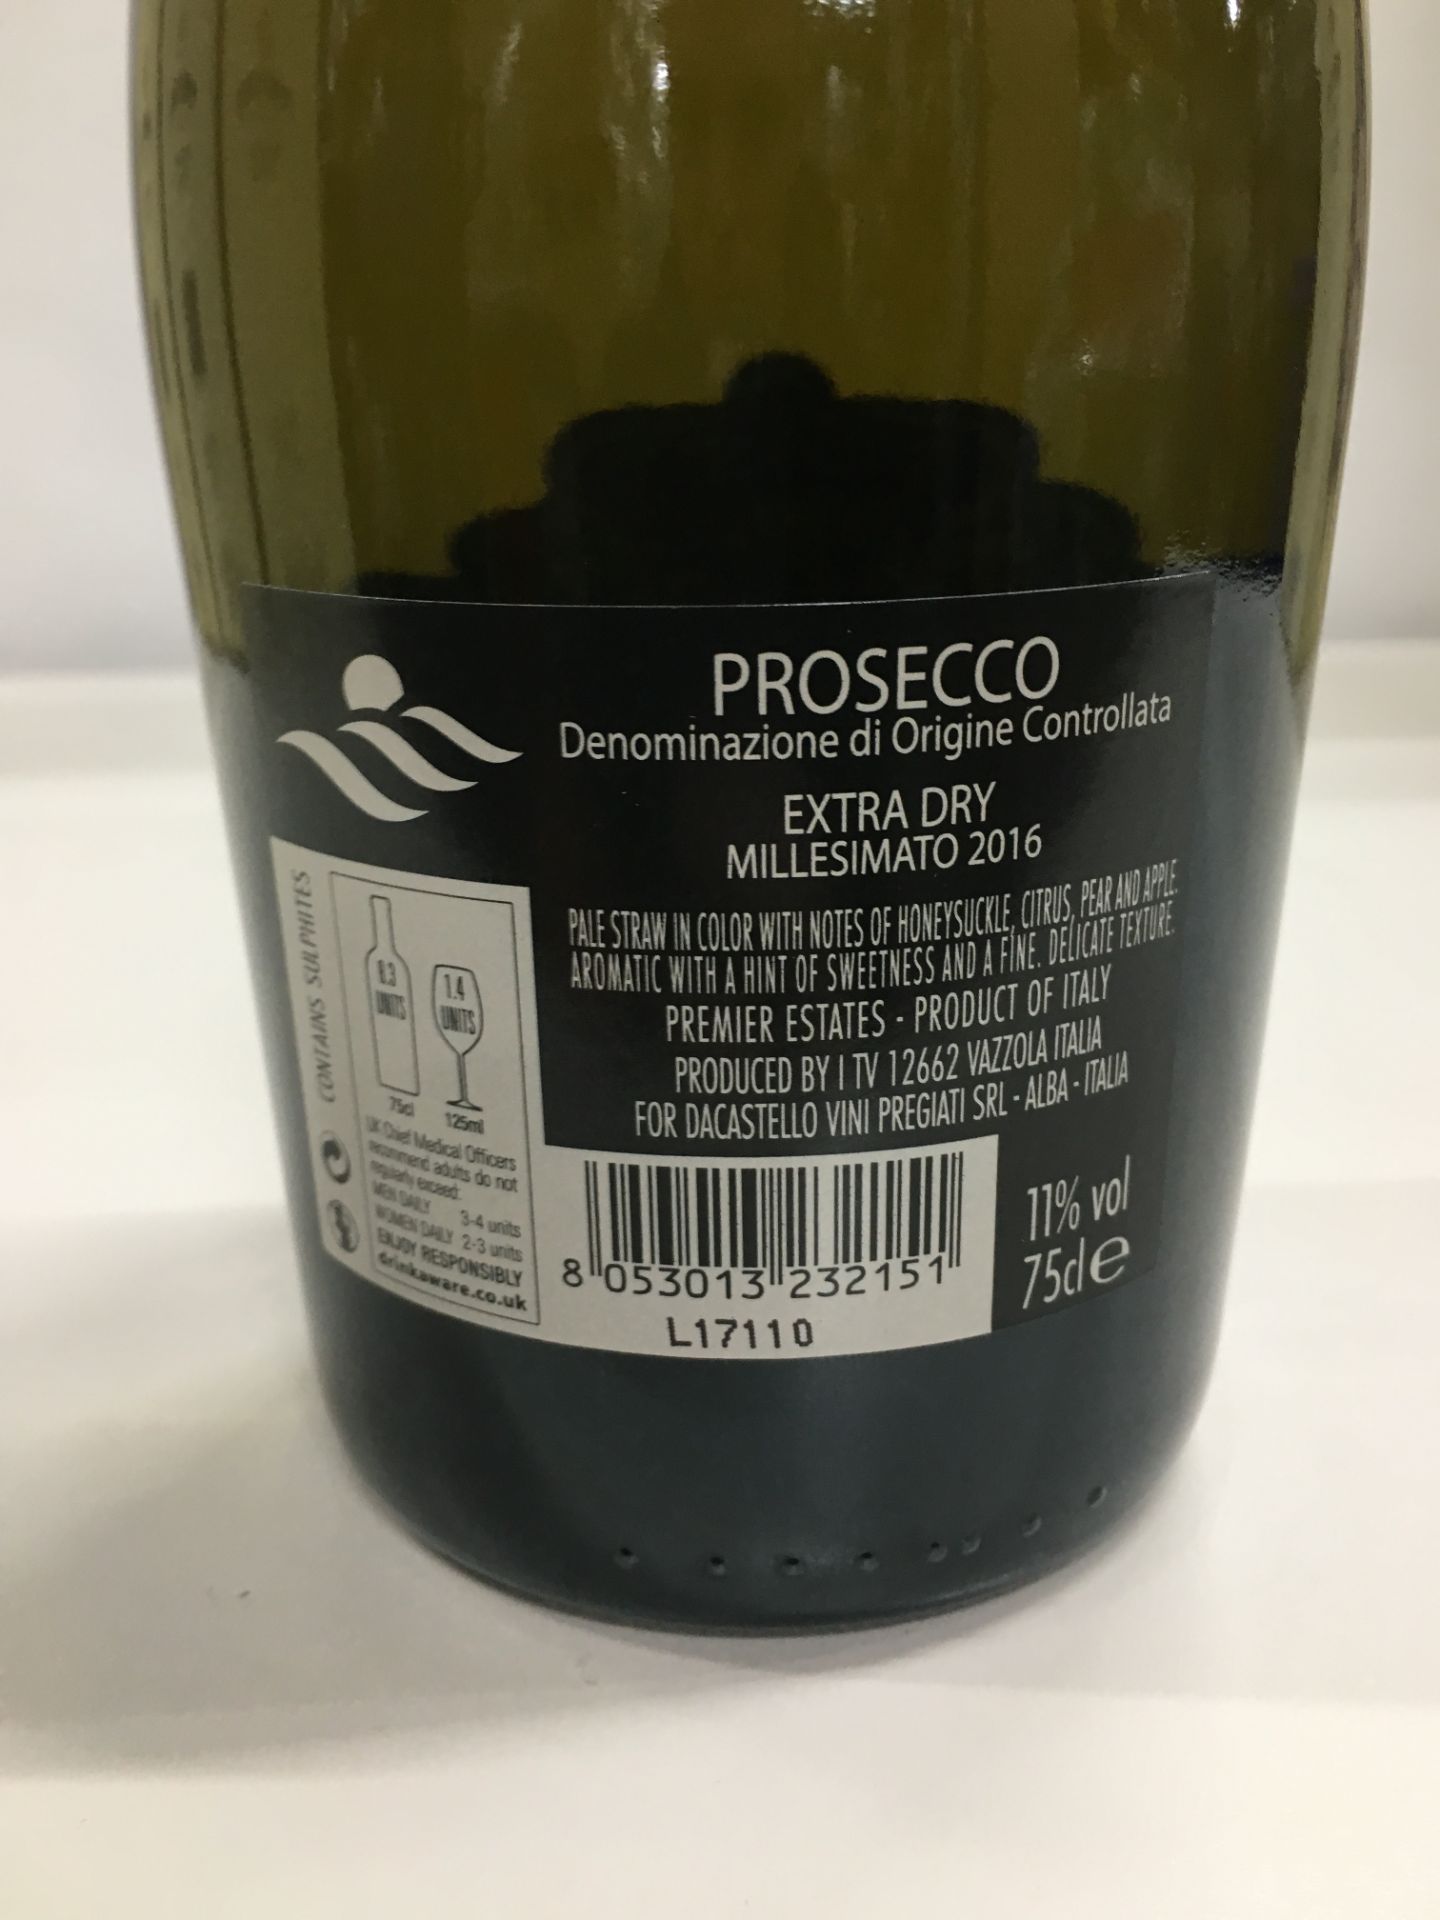 24 x 75cl Bottles Premier Estates Spumante Prosecco DOC Millesimato 2016 Extra Dry - Image 3 of 6